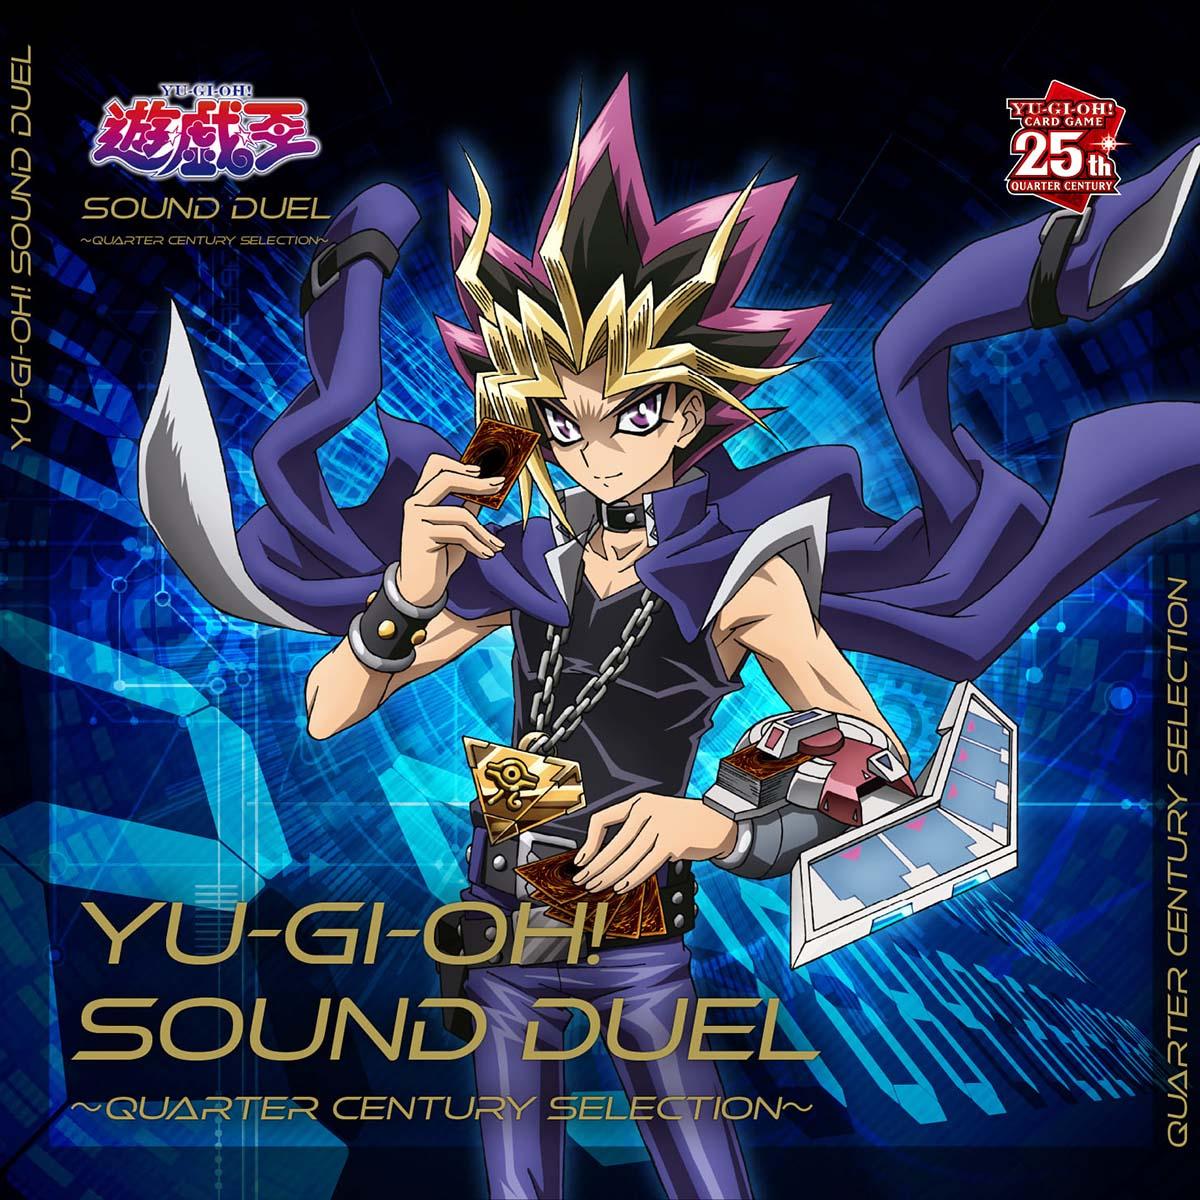 YU-GI-OH! Sound Duel - Quarter Century Selection